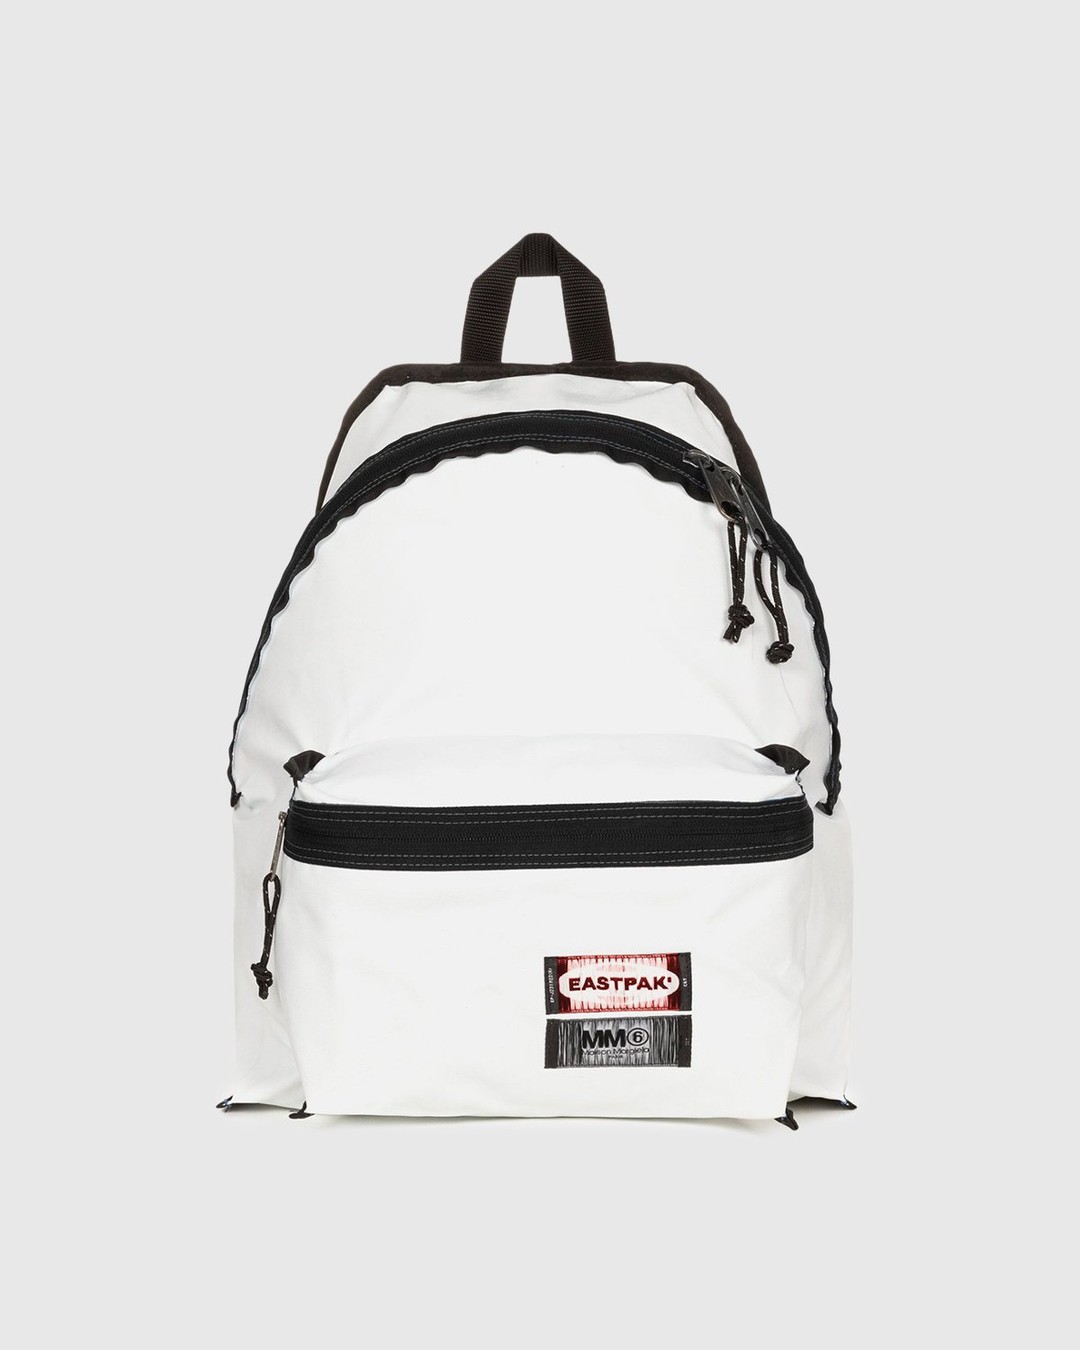 MM6 Maison Margiela x Eastpak – Padded Backpack Black - Backpacks - Black - Image 4